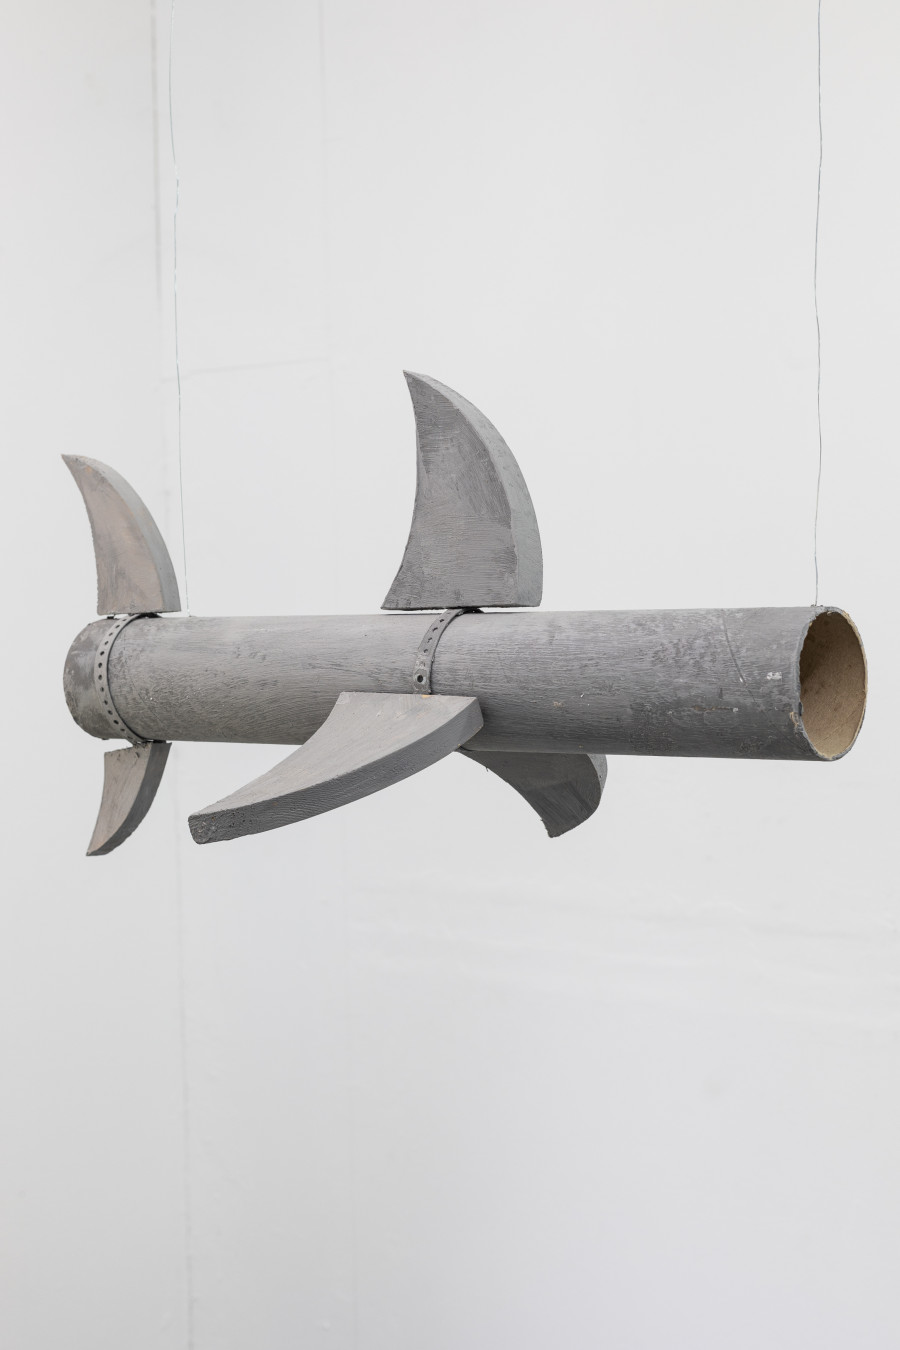 Sam Porritt, Product of Its Environment, 2022, Acrylic Paint, Cardboard Tube, Screws, Steel Band, Wire, Wood, 33 x 77 cm. Photo: Kilian Bannwart